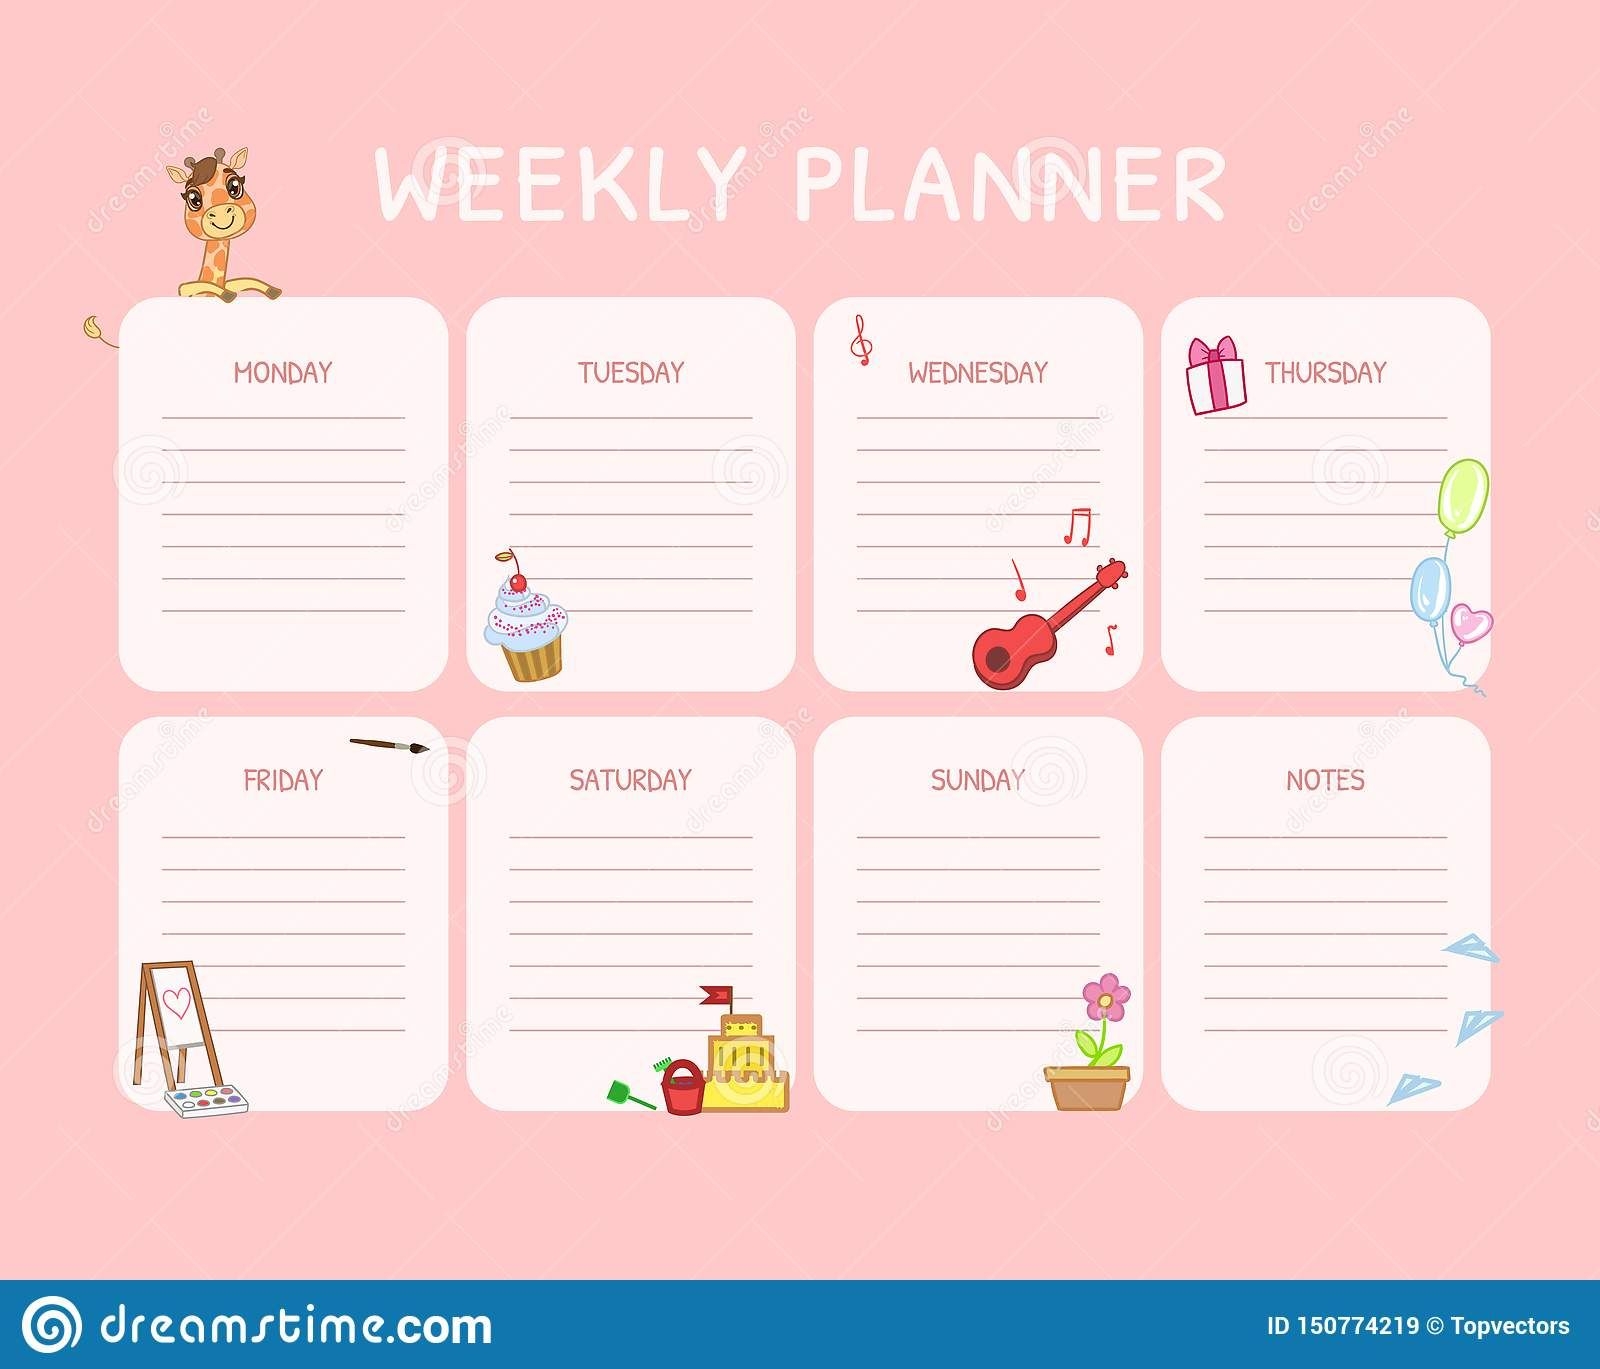 Kids Weekly Planner, Calendar Daily Pink Template, Organizer